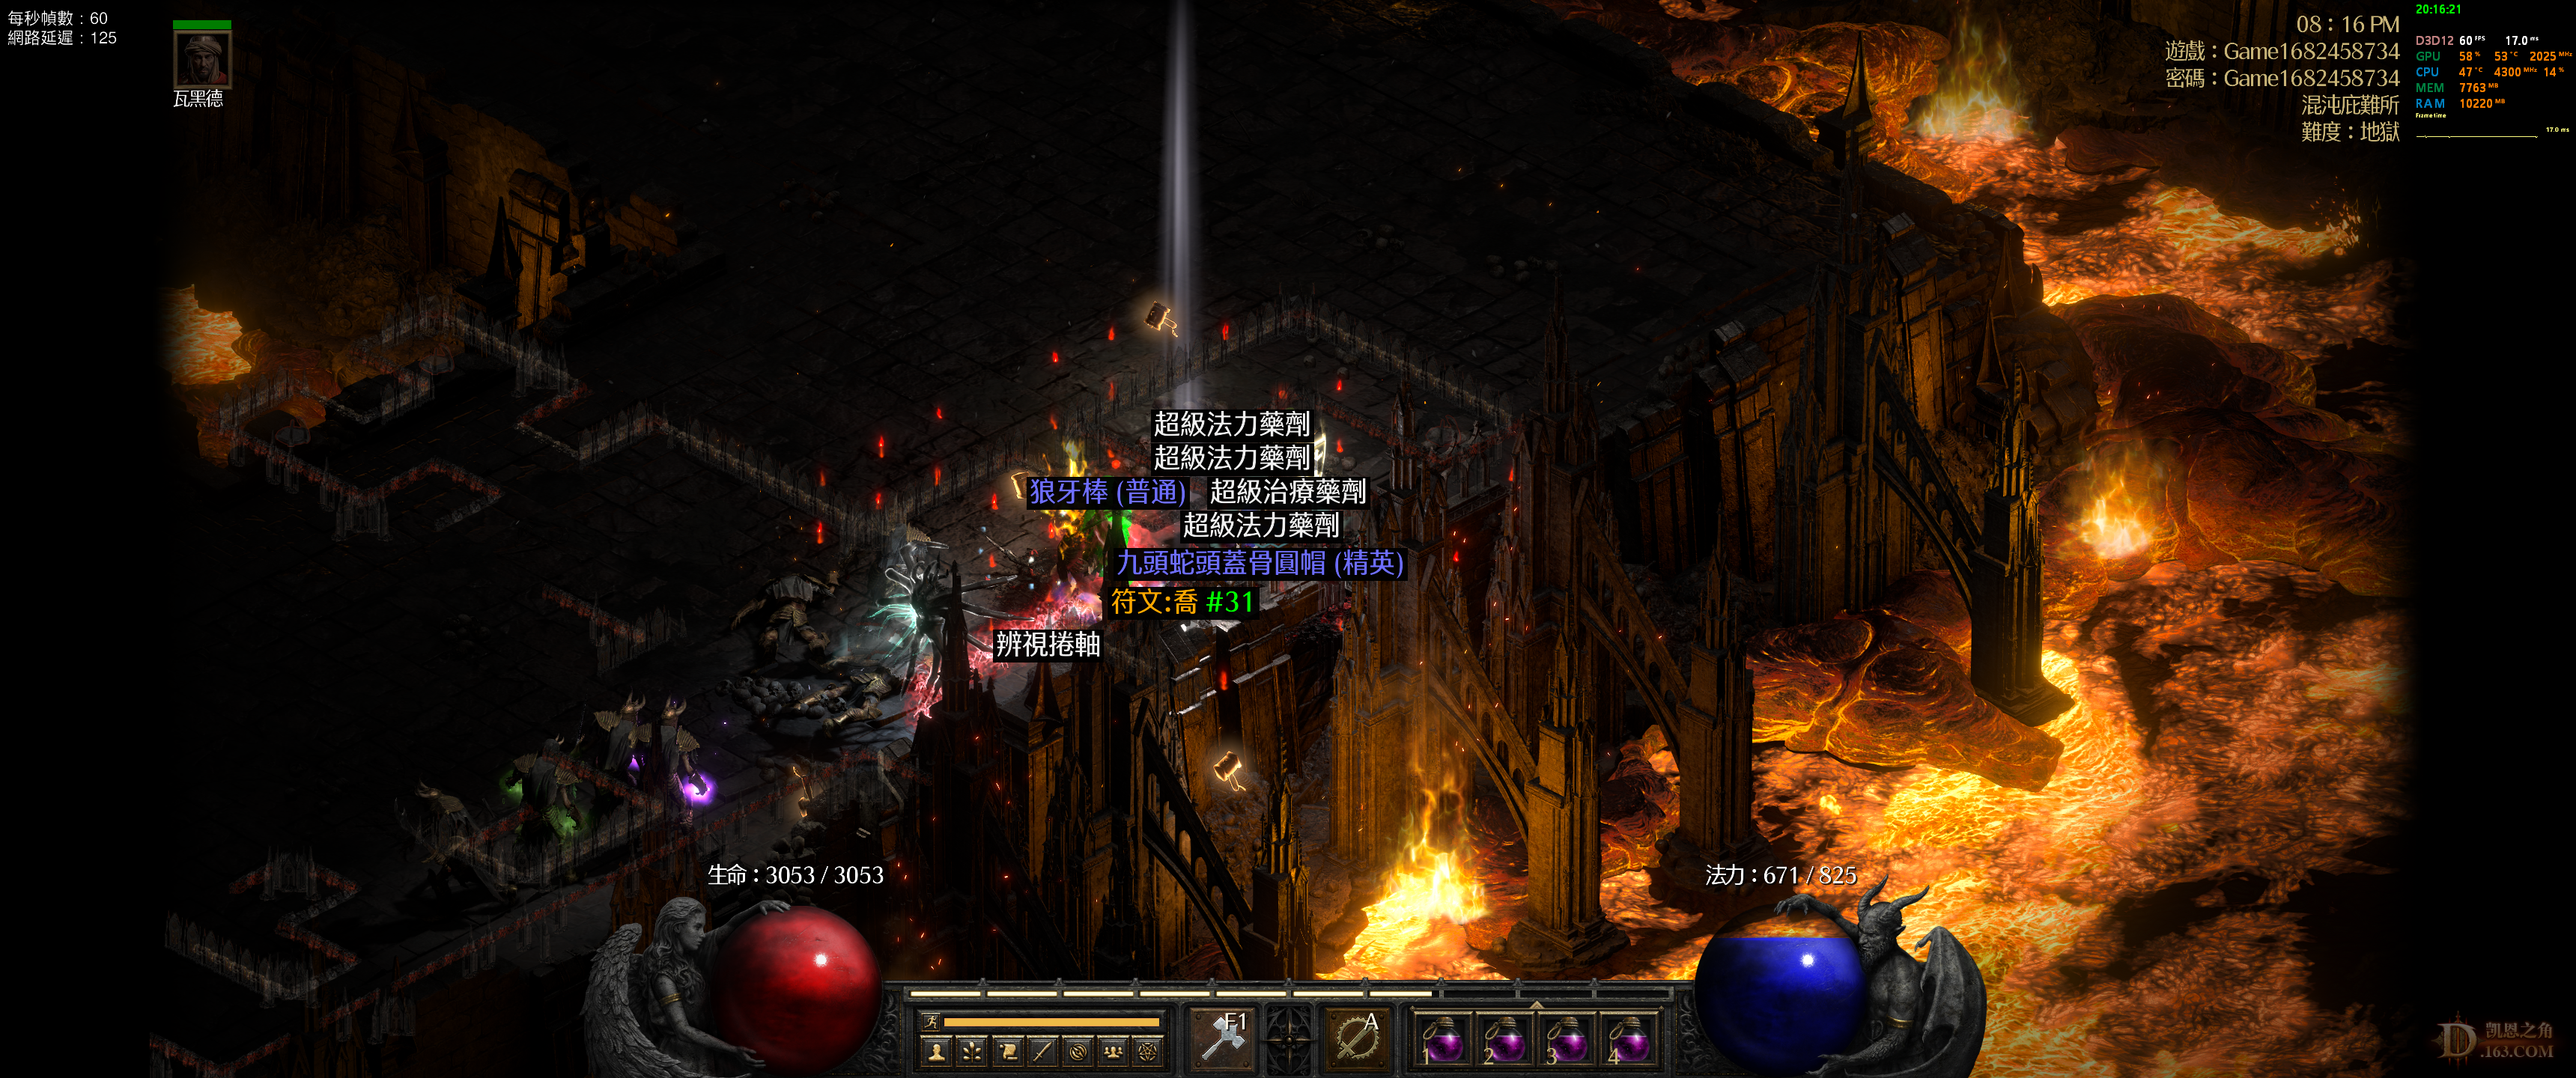 Diablo 2 Resurrected Screenshot 2021.12.08 - 20.16.22.15.png